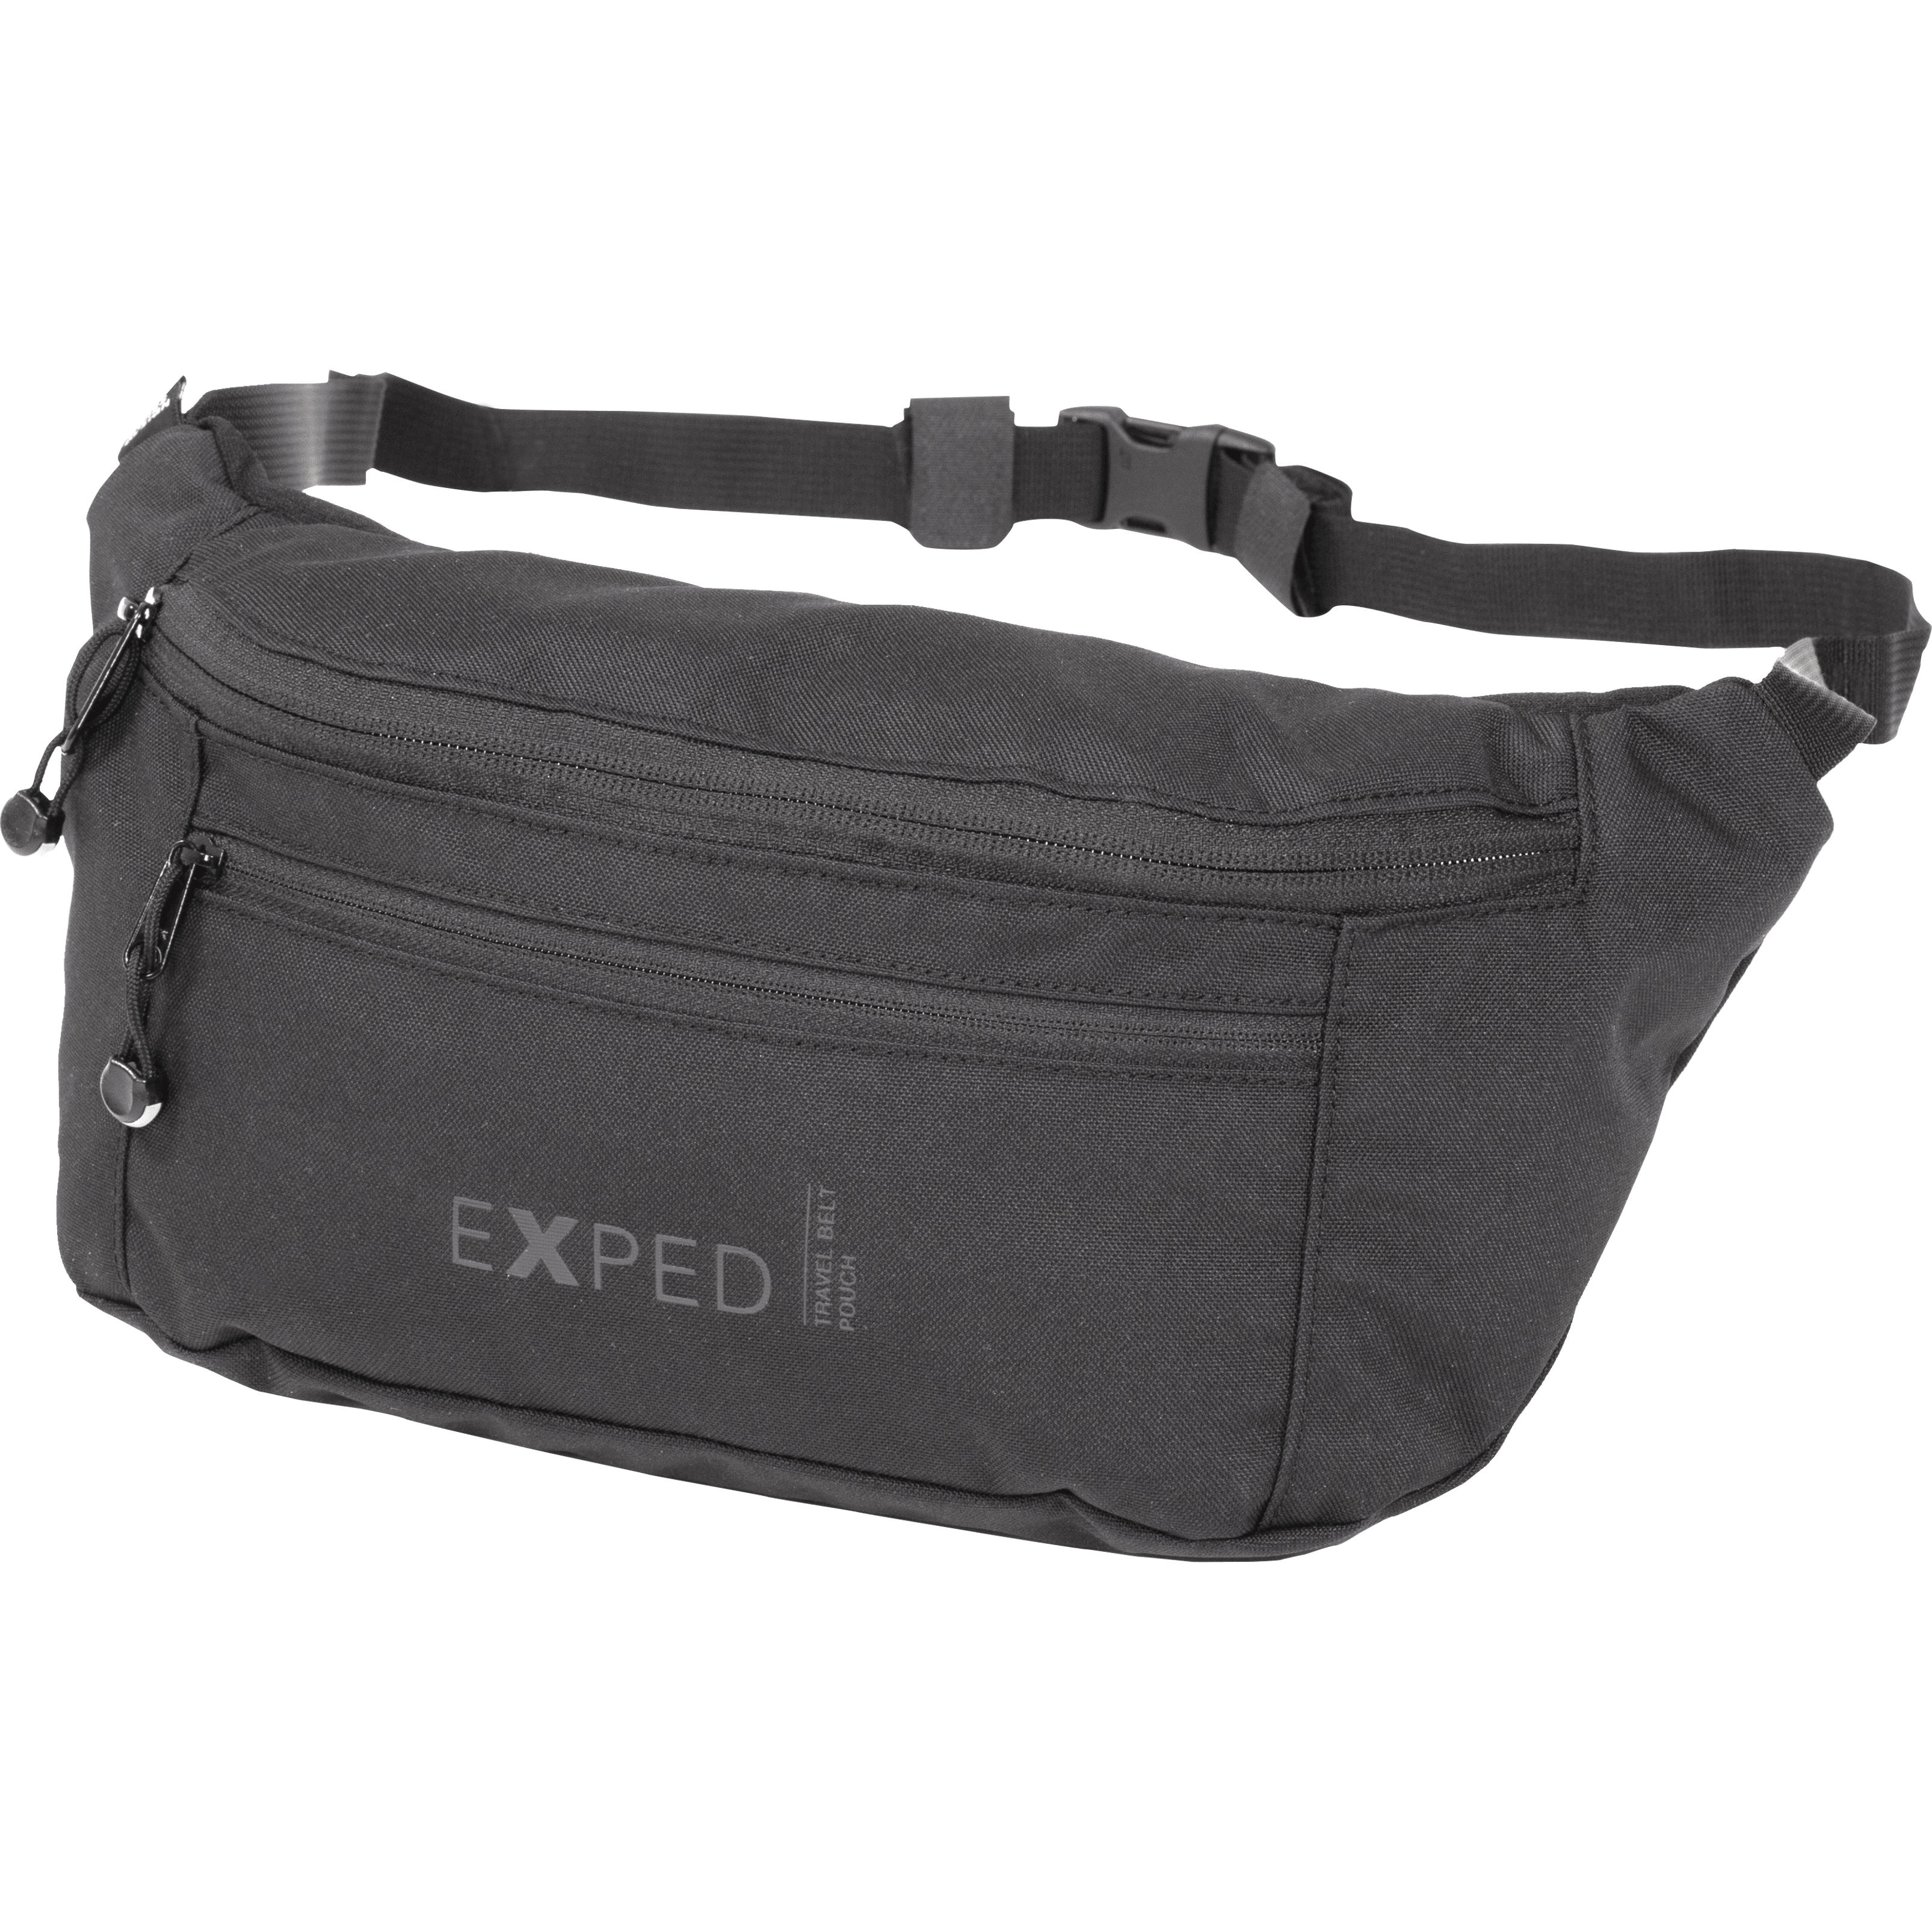 Поясная сумка Exped Travel Belt Pouch black - черныйфото1